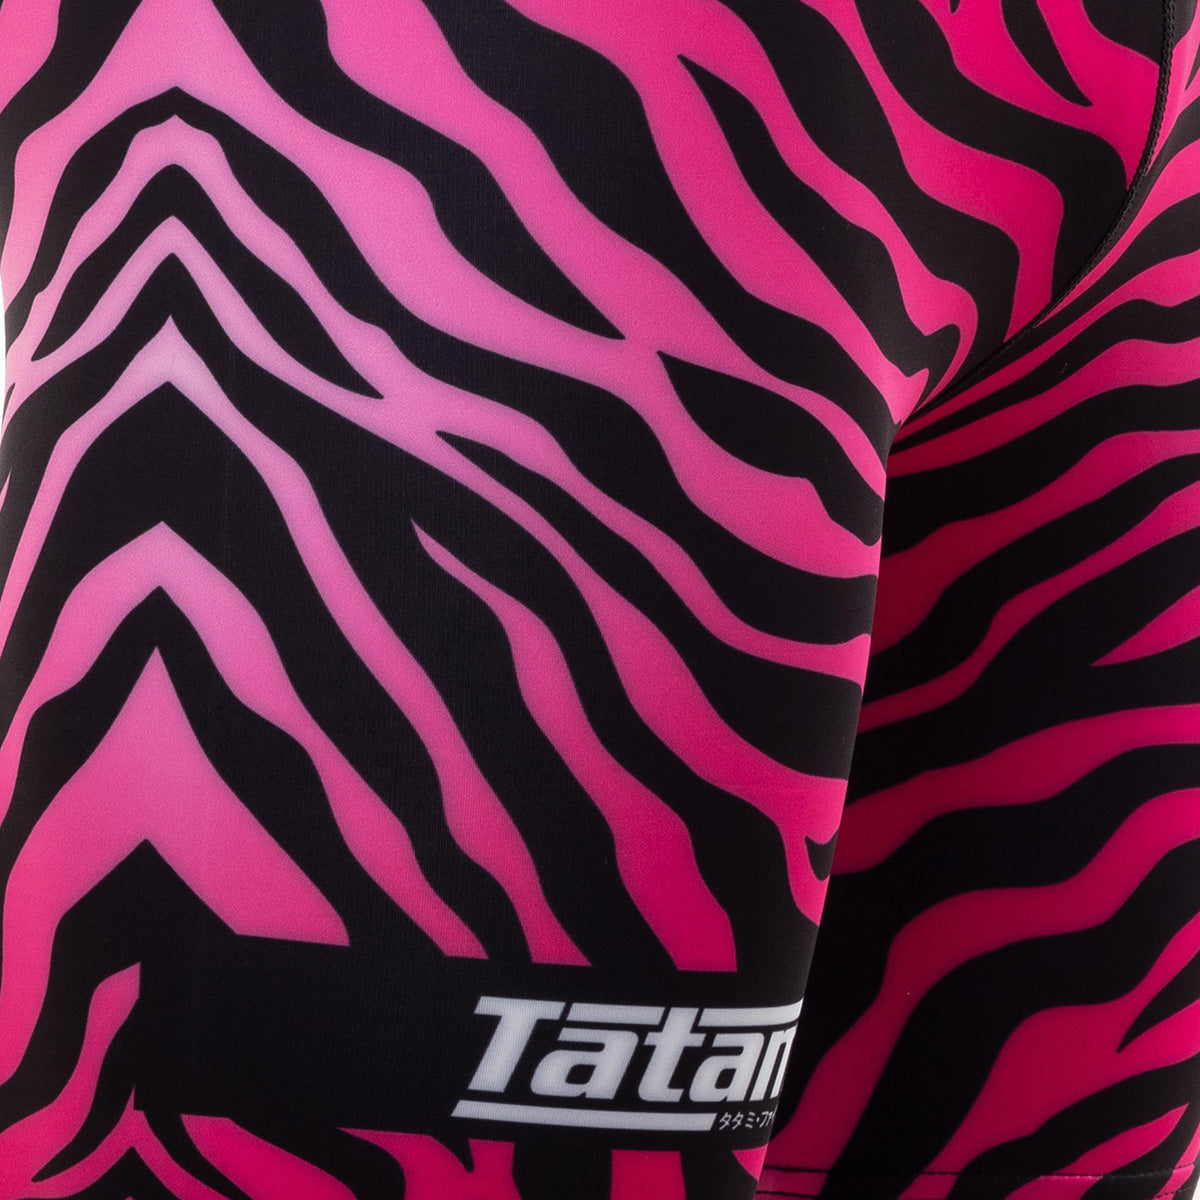 Tatami Fightwear Recharge Vale Tudo Shorts - Pink Tatami Fightwear